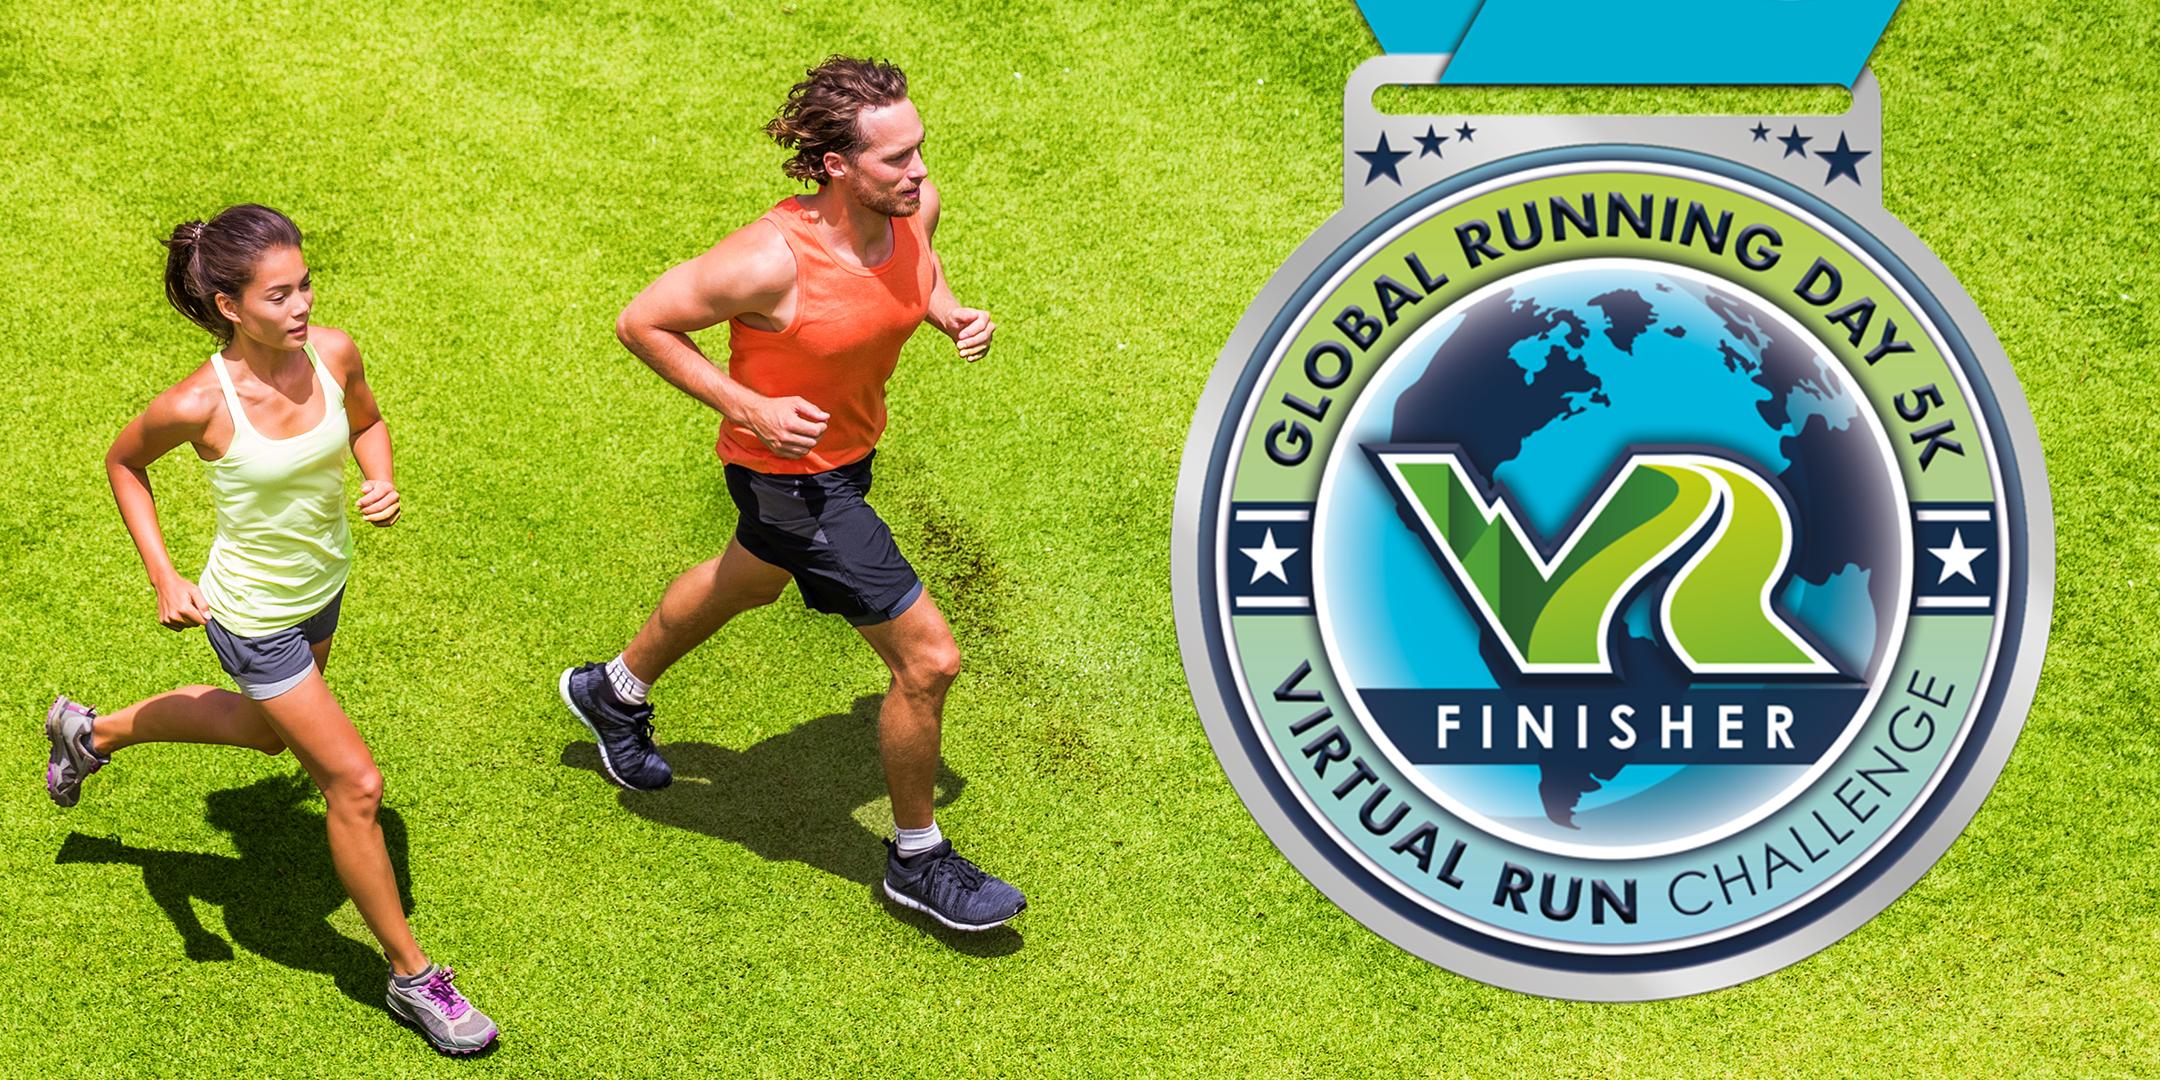 2020 Global Running Day Free Virtual 5k - Cincinnati